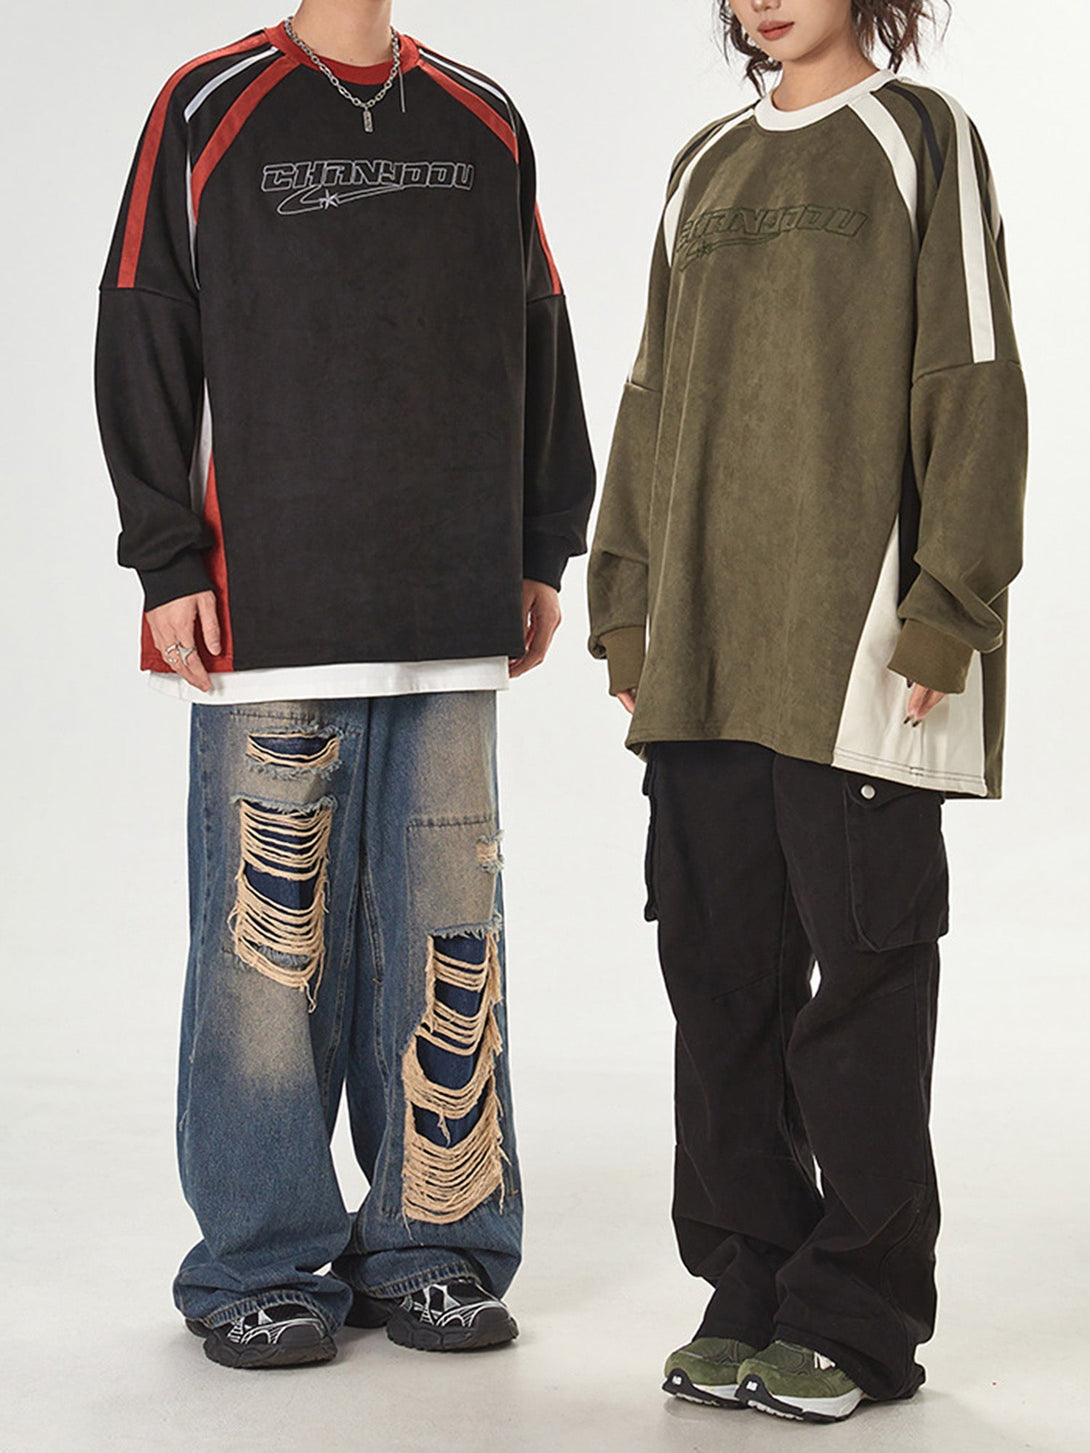 Majesda® - Patchwork Contrasting Two-tone Raglan Embroidered Sweatshirt- Outfit Ideas - Streetwear Fashion - majesda.com